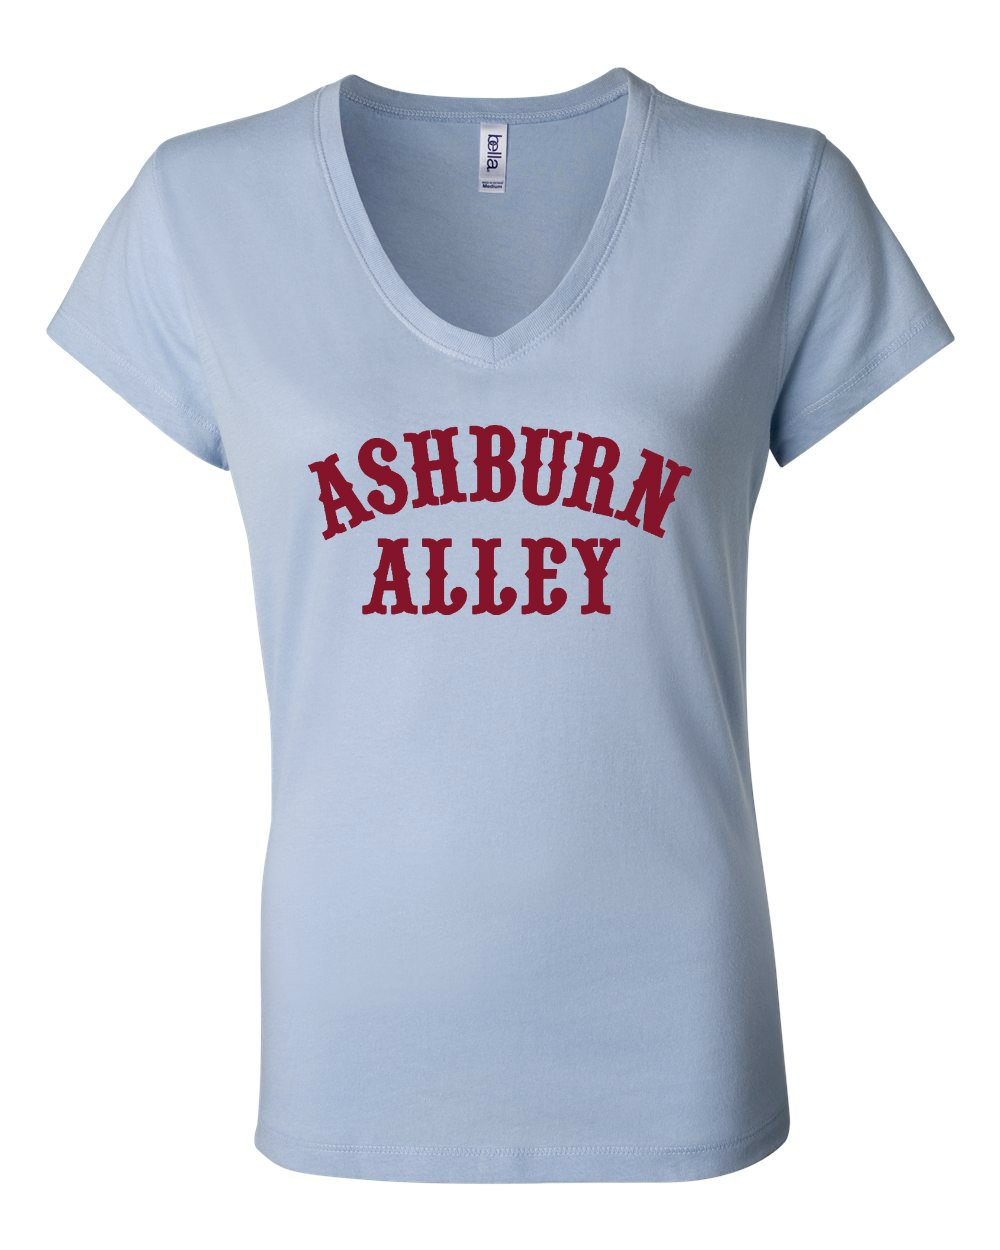 Ashburn Alley LADIES Junior Fit V-Neck